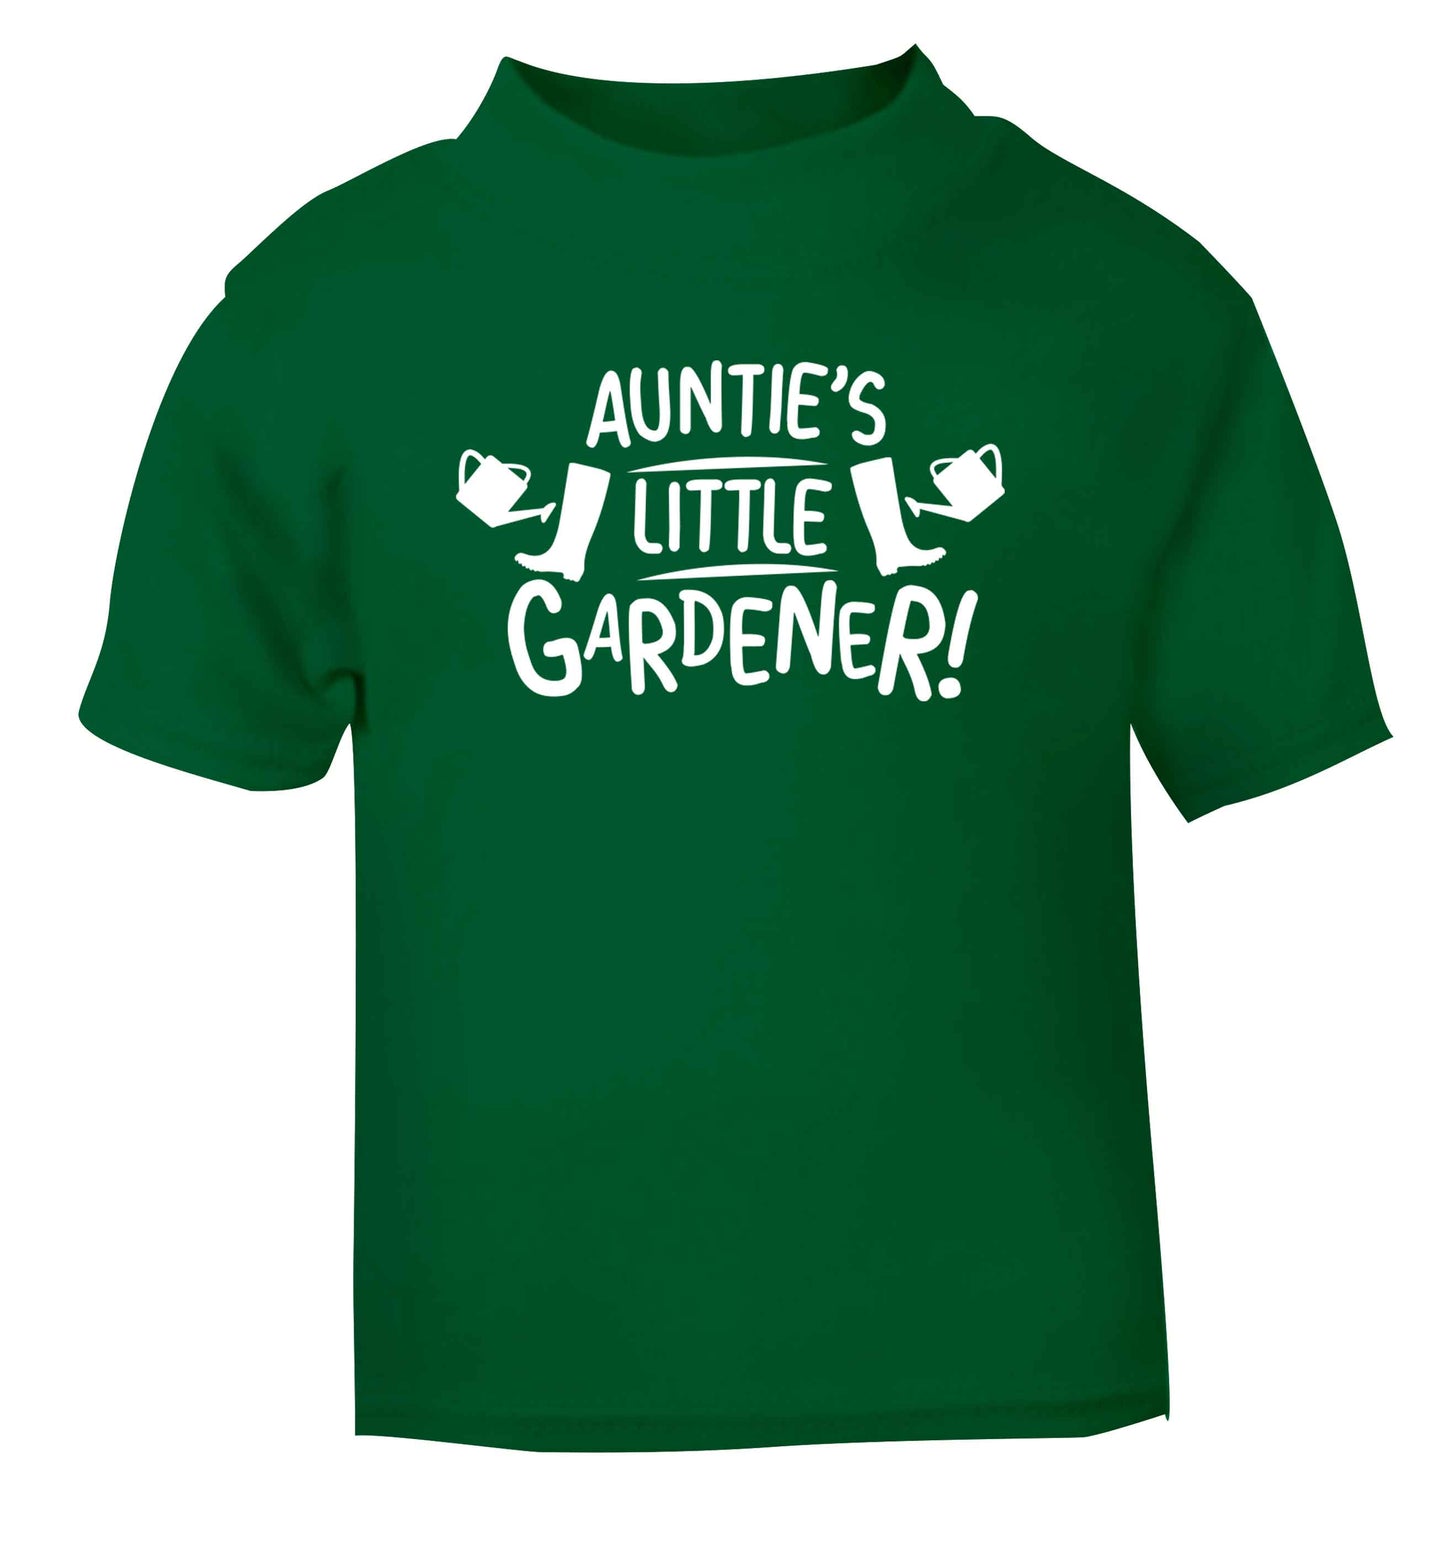 Auntie's little gardener green Baby Toddler Tshirt 2 Years